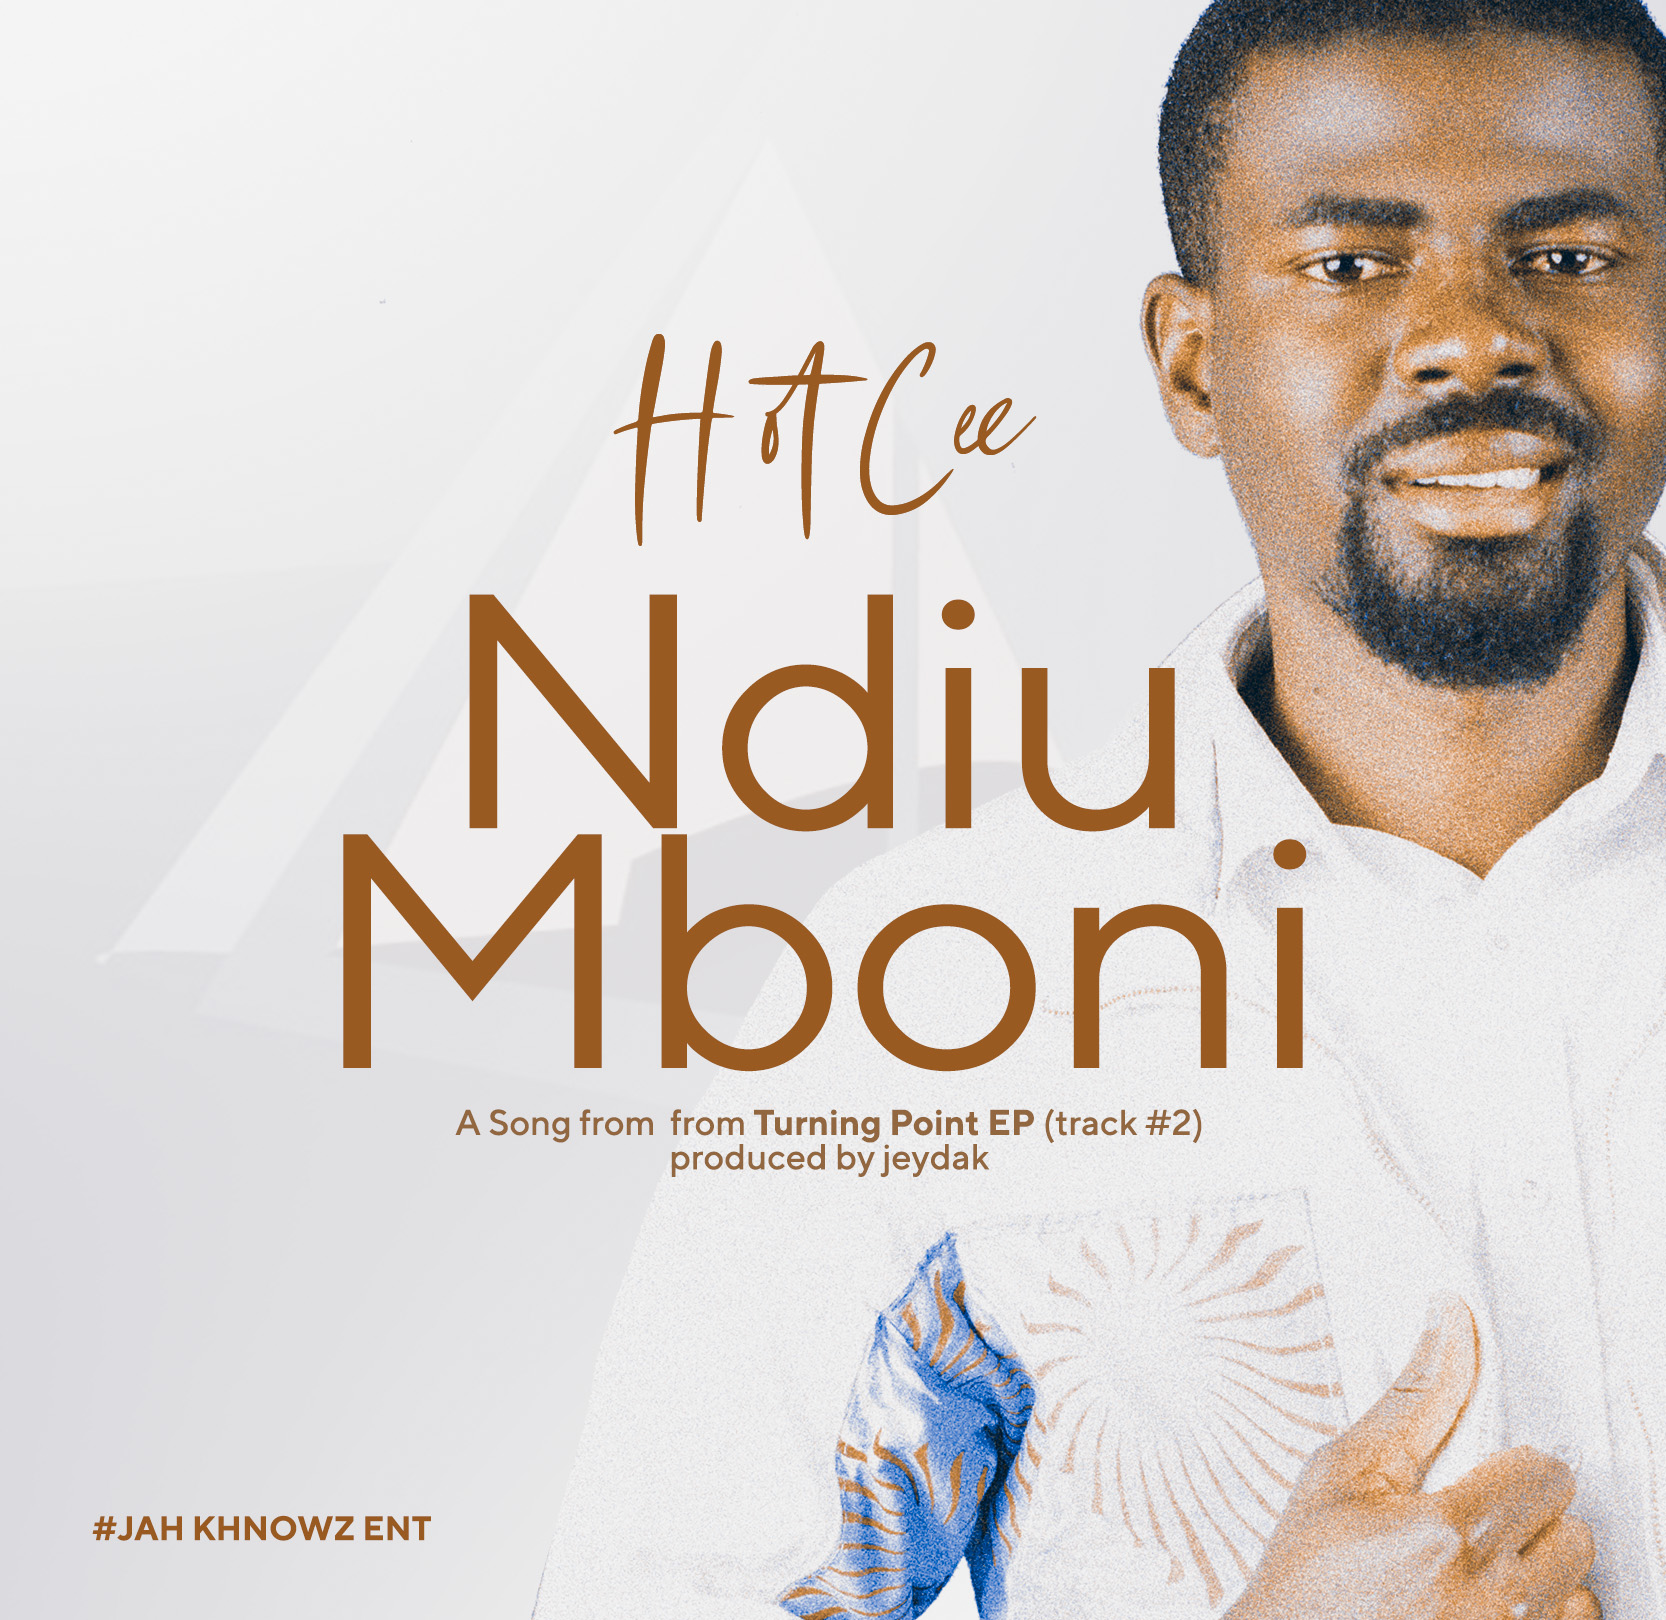  [Music Download] Hot Cee – Ndiumboni